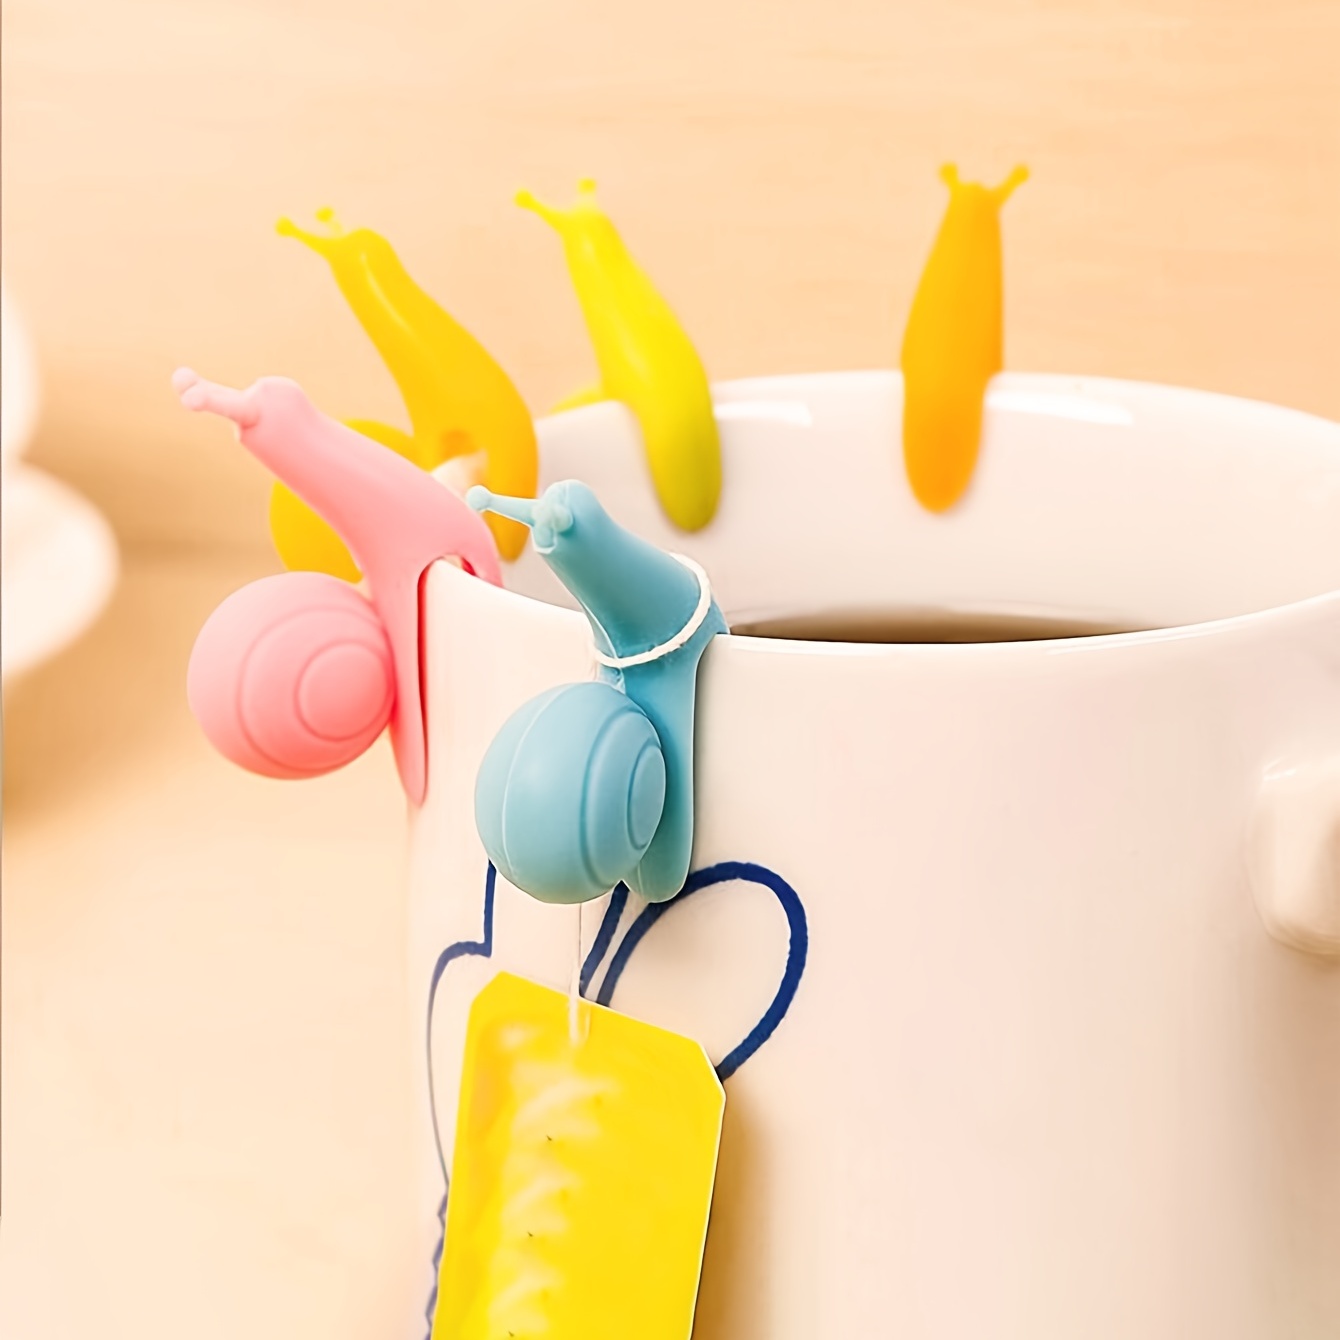 5pcs Adorable Silicone Tea Bag Holders - Cute Snail Shaped & Candy Colored  - Random Color Selection